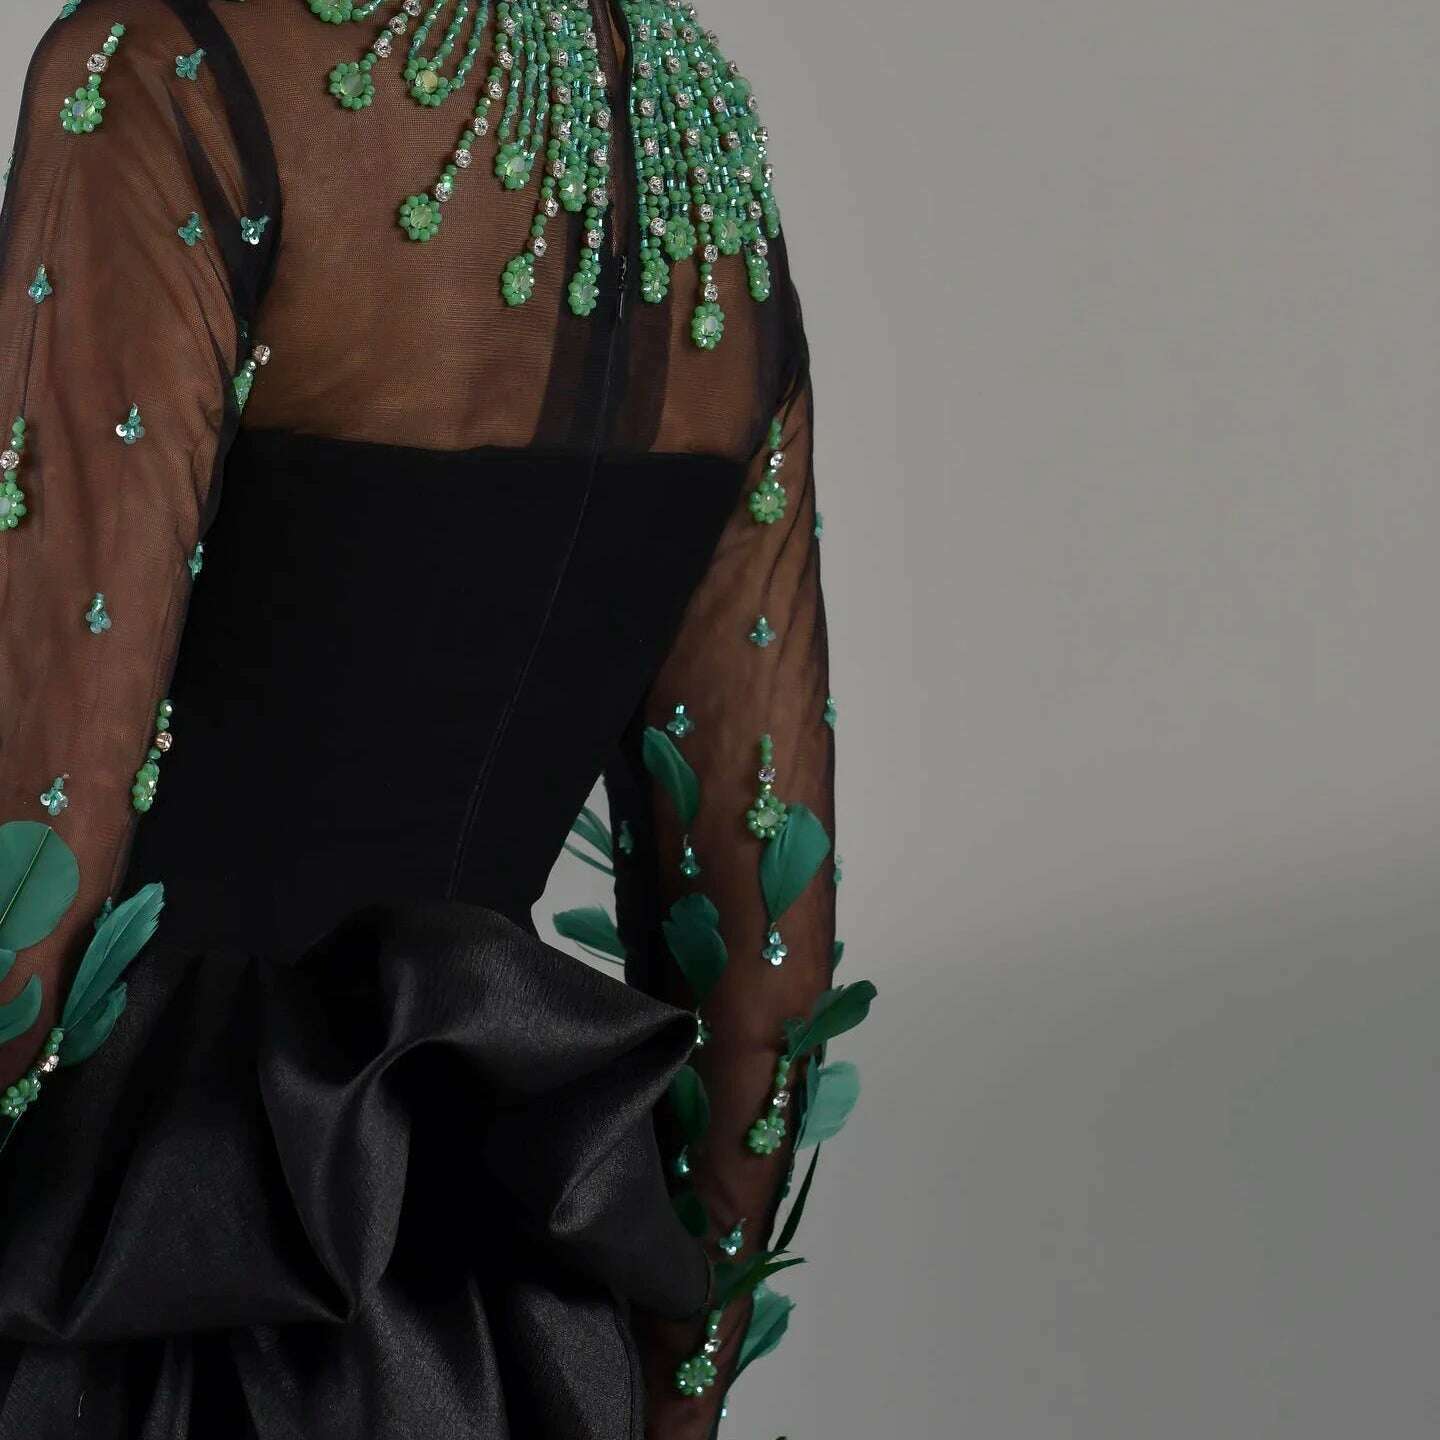 KIMLUD, Sharon Said Luxury Dubai Emerald Green Feathers Black Evening Dress Long Sleeves Saudi Arabia Women Formal Party Gowns SS457, KIMLUD Women's Clothes